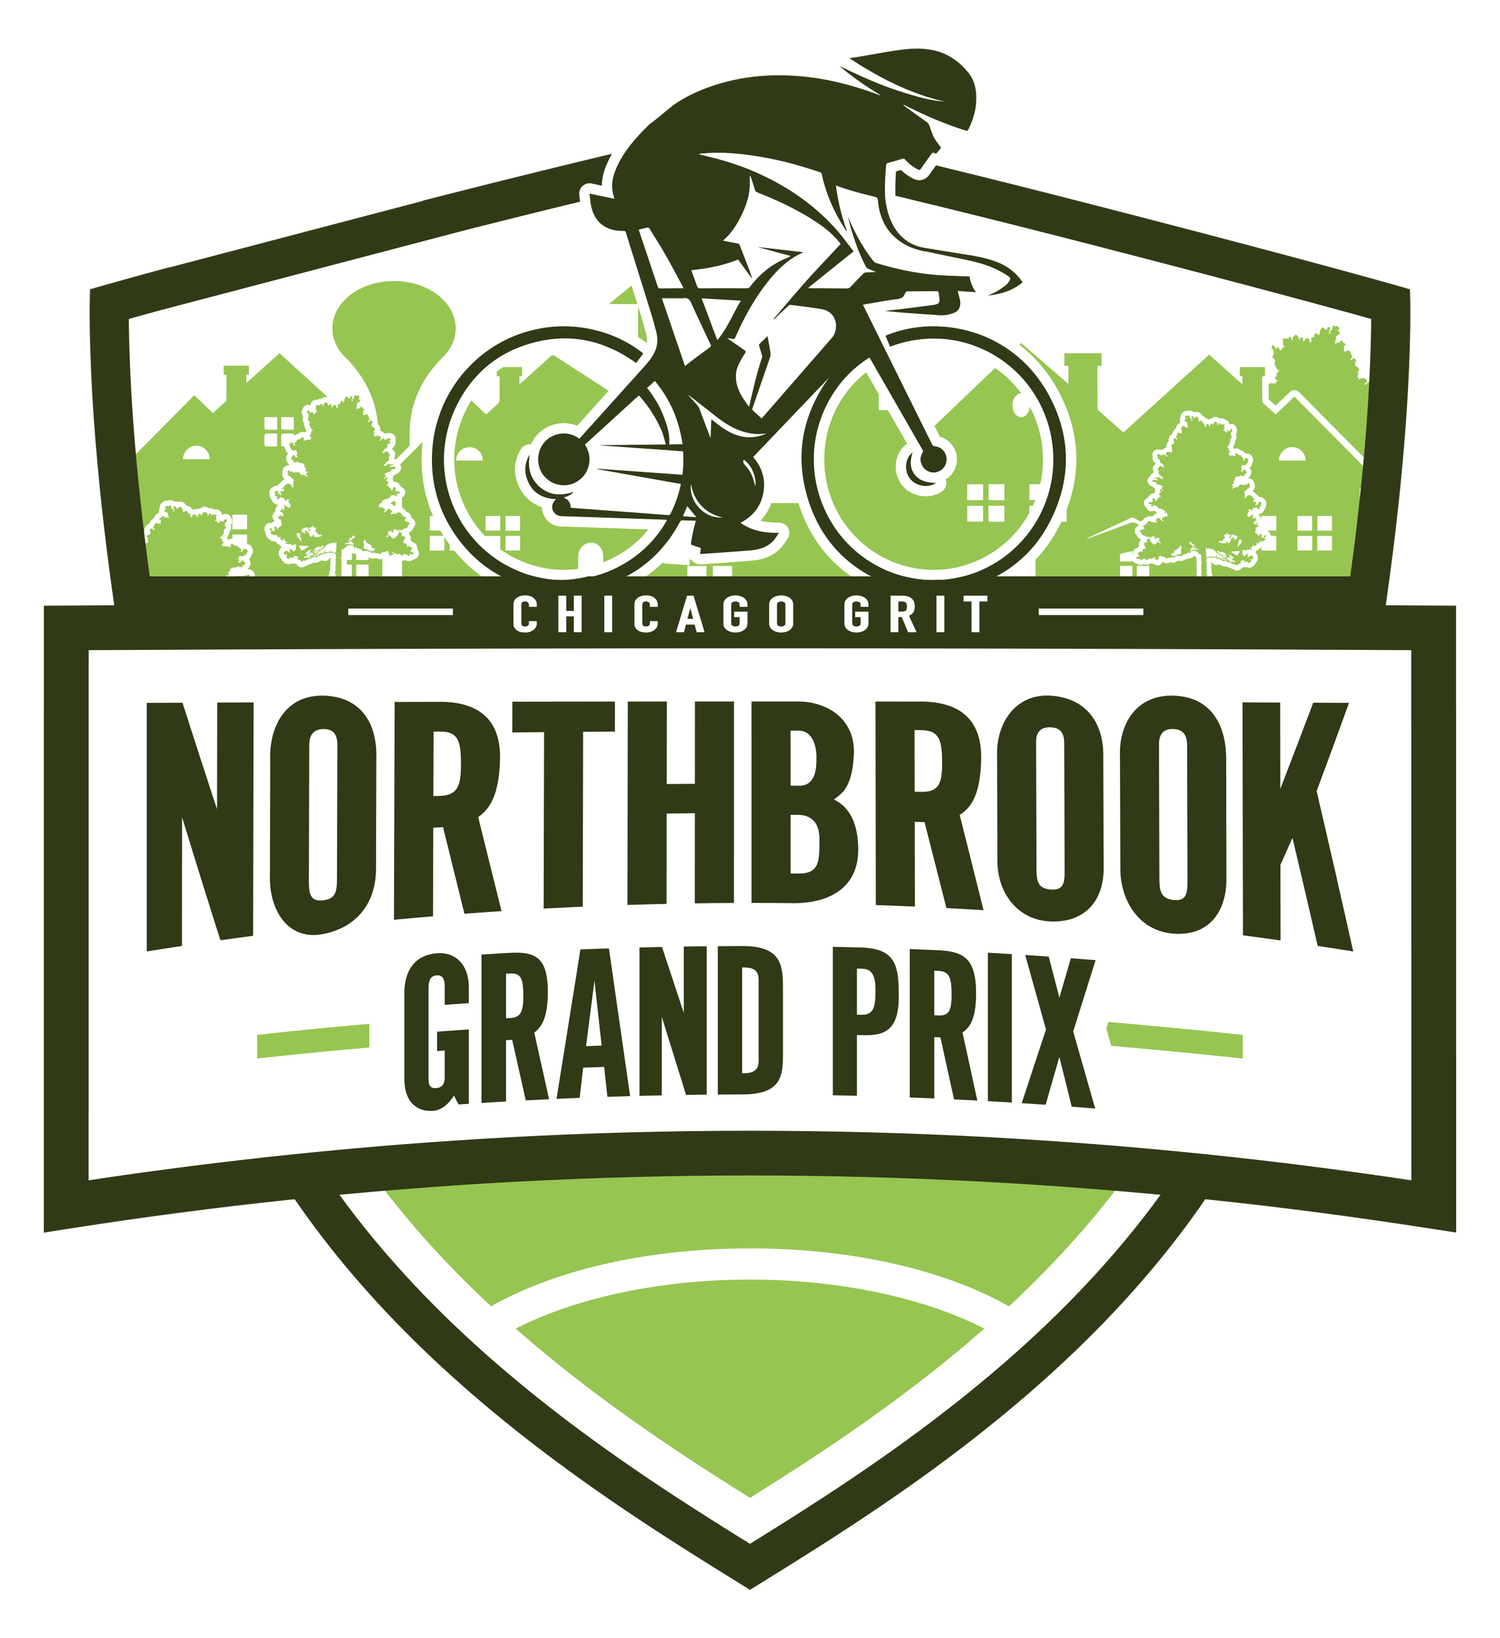 Northbrook Grand Prix - Chicago Grit Criterium Race Series - Northbrook, IL